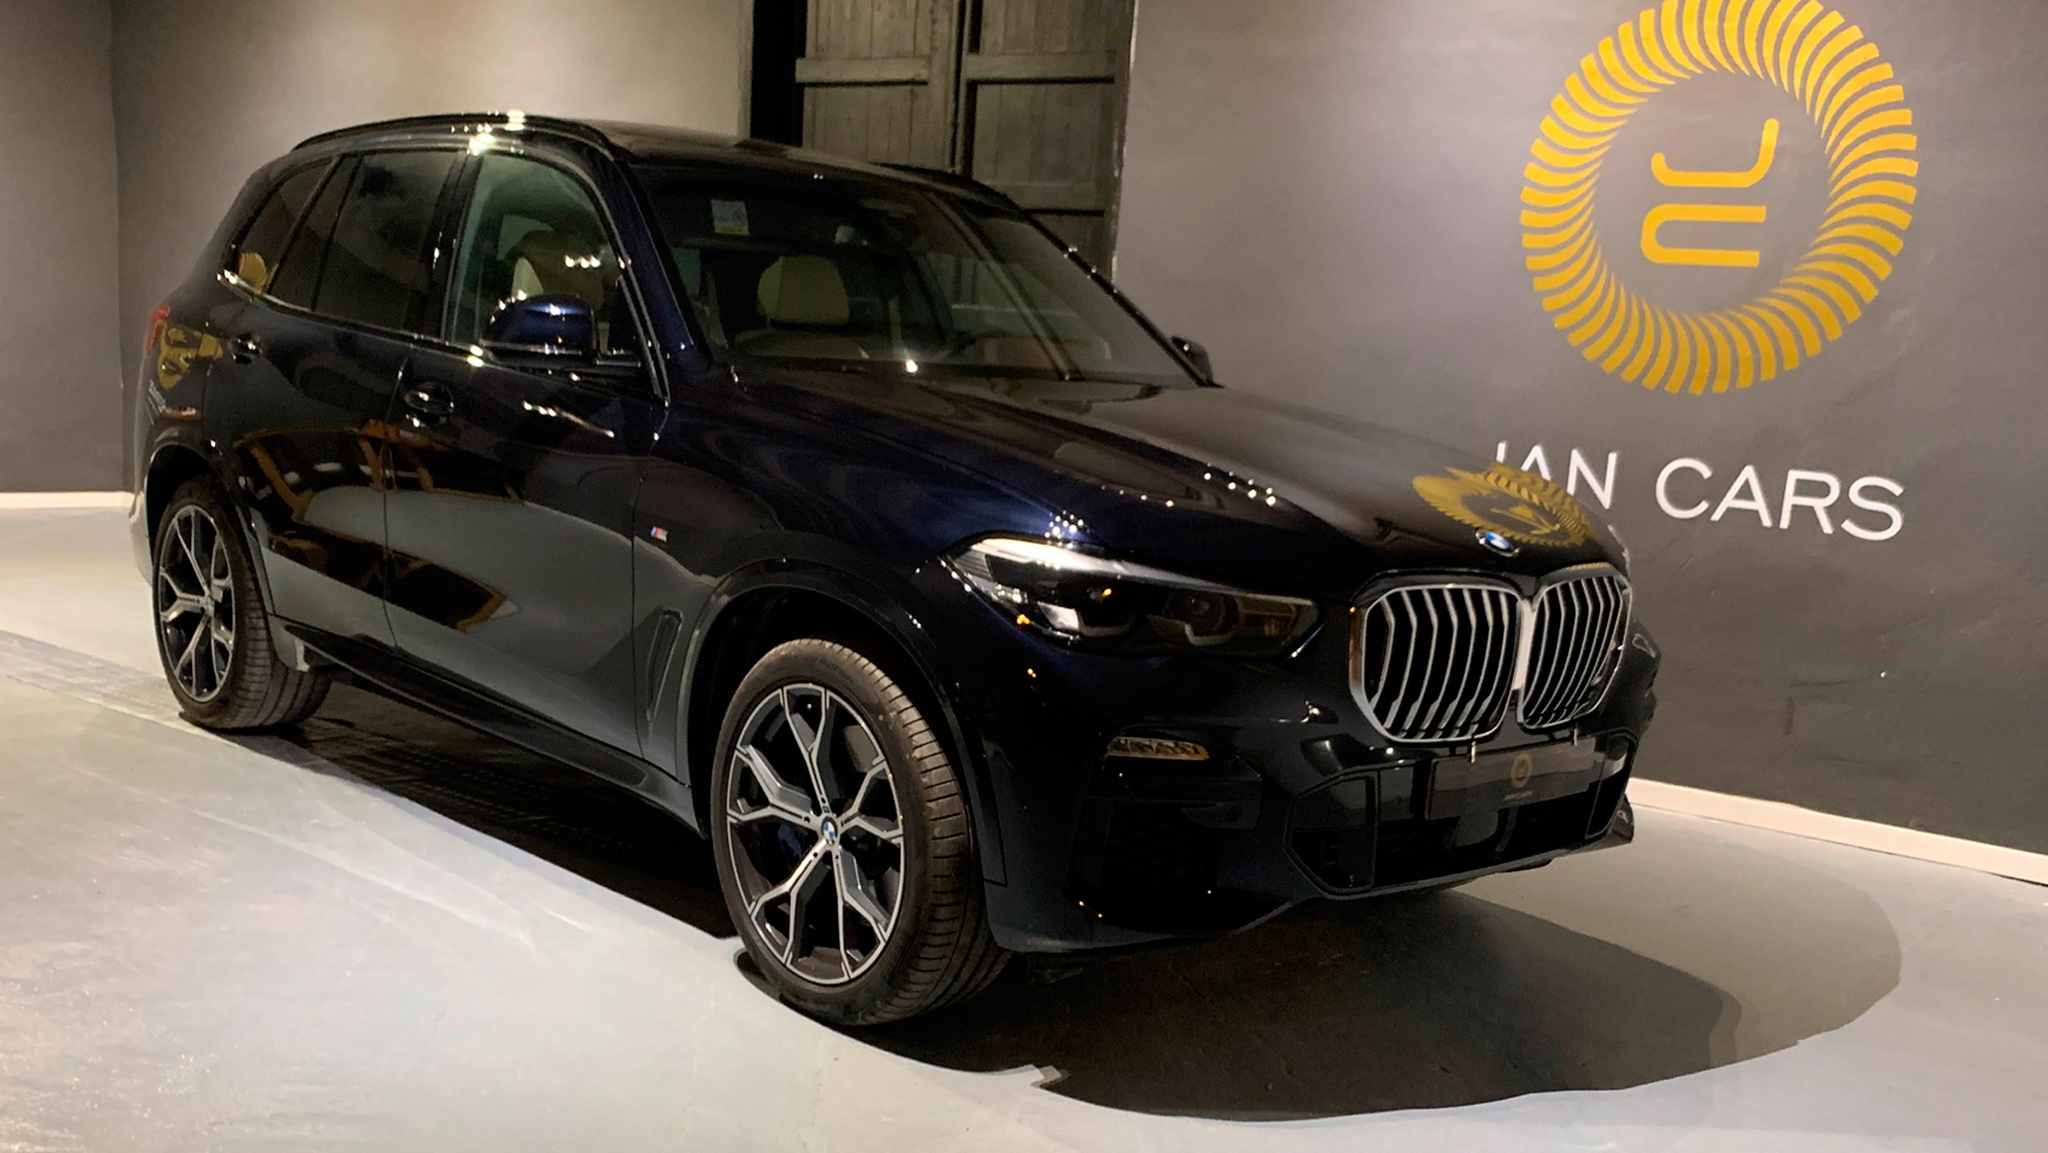 BMW X5 3.0 xDrive Pack M Jancars, alquiler de coches de alta gama, deportivos y de lujo